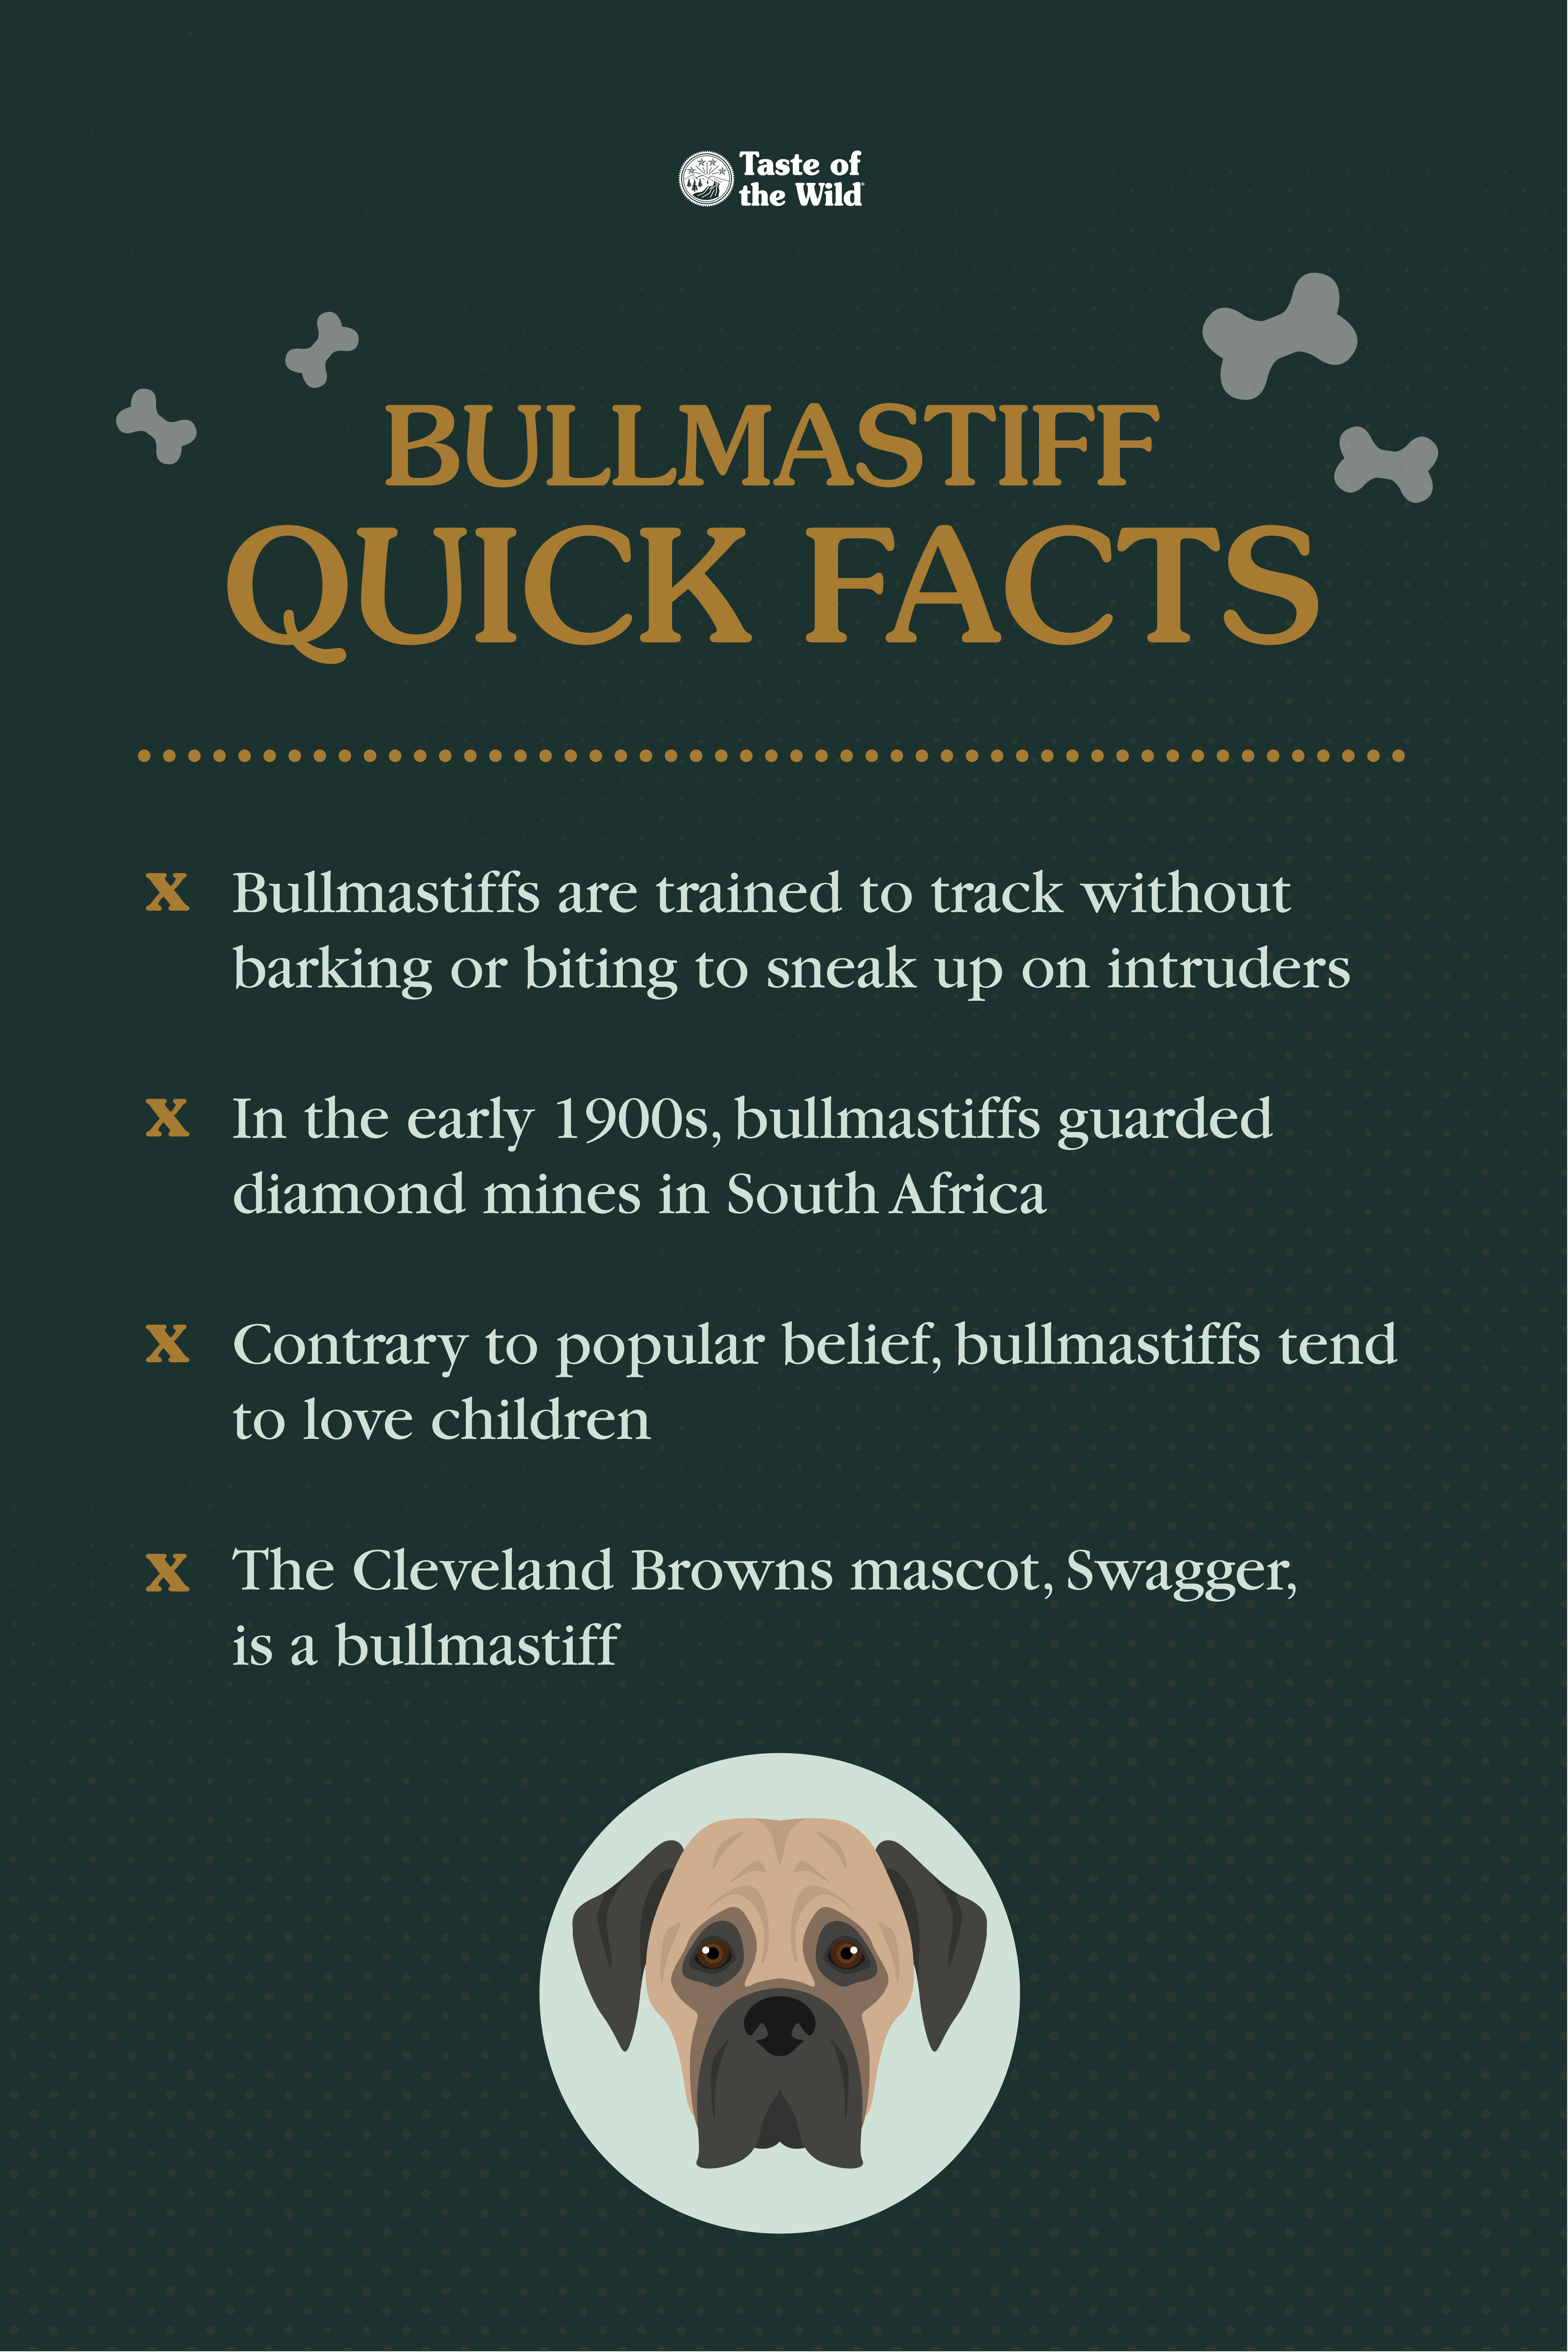 Bullmastiff Quick Facts Info Graphic | Taste of the Wild